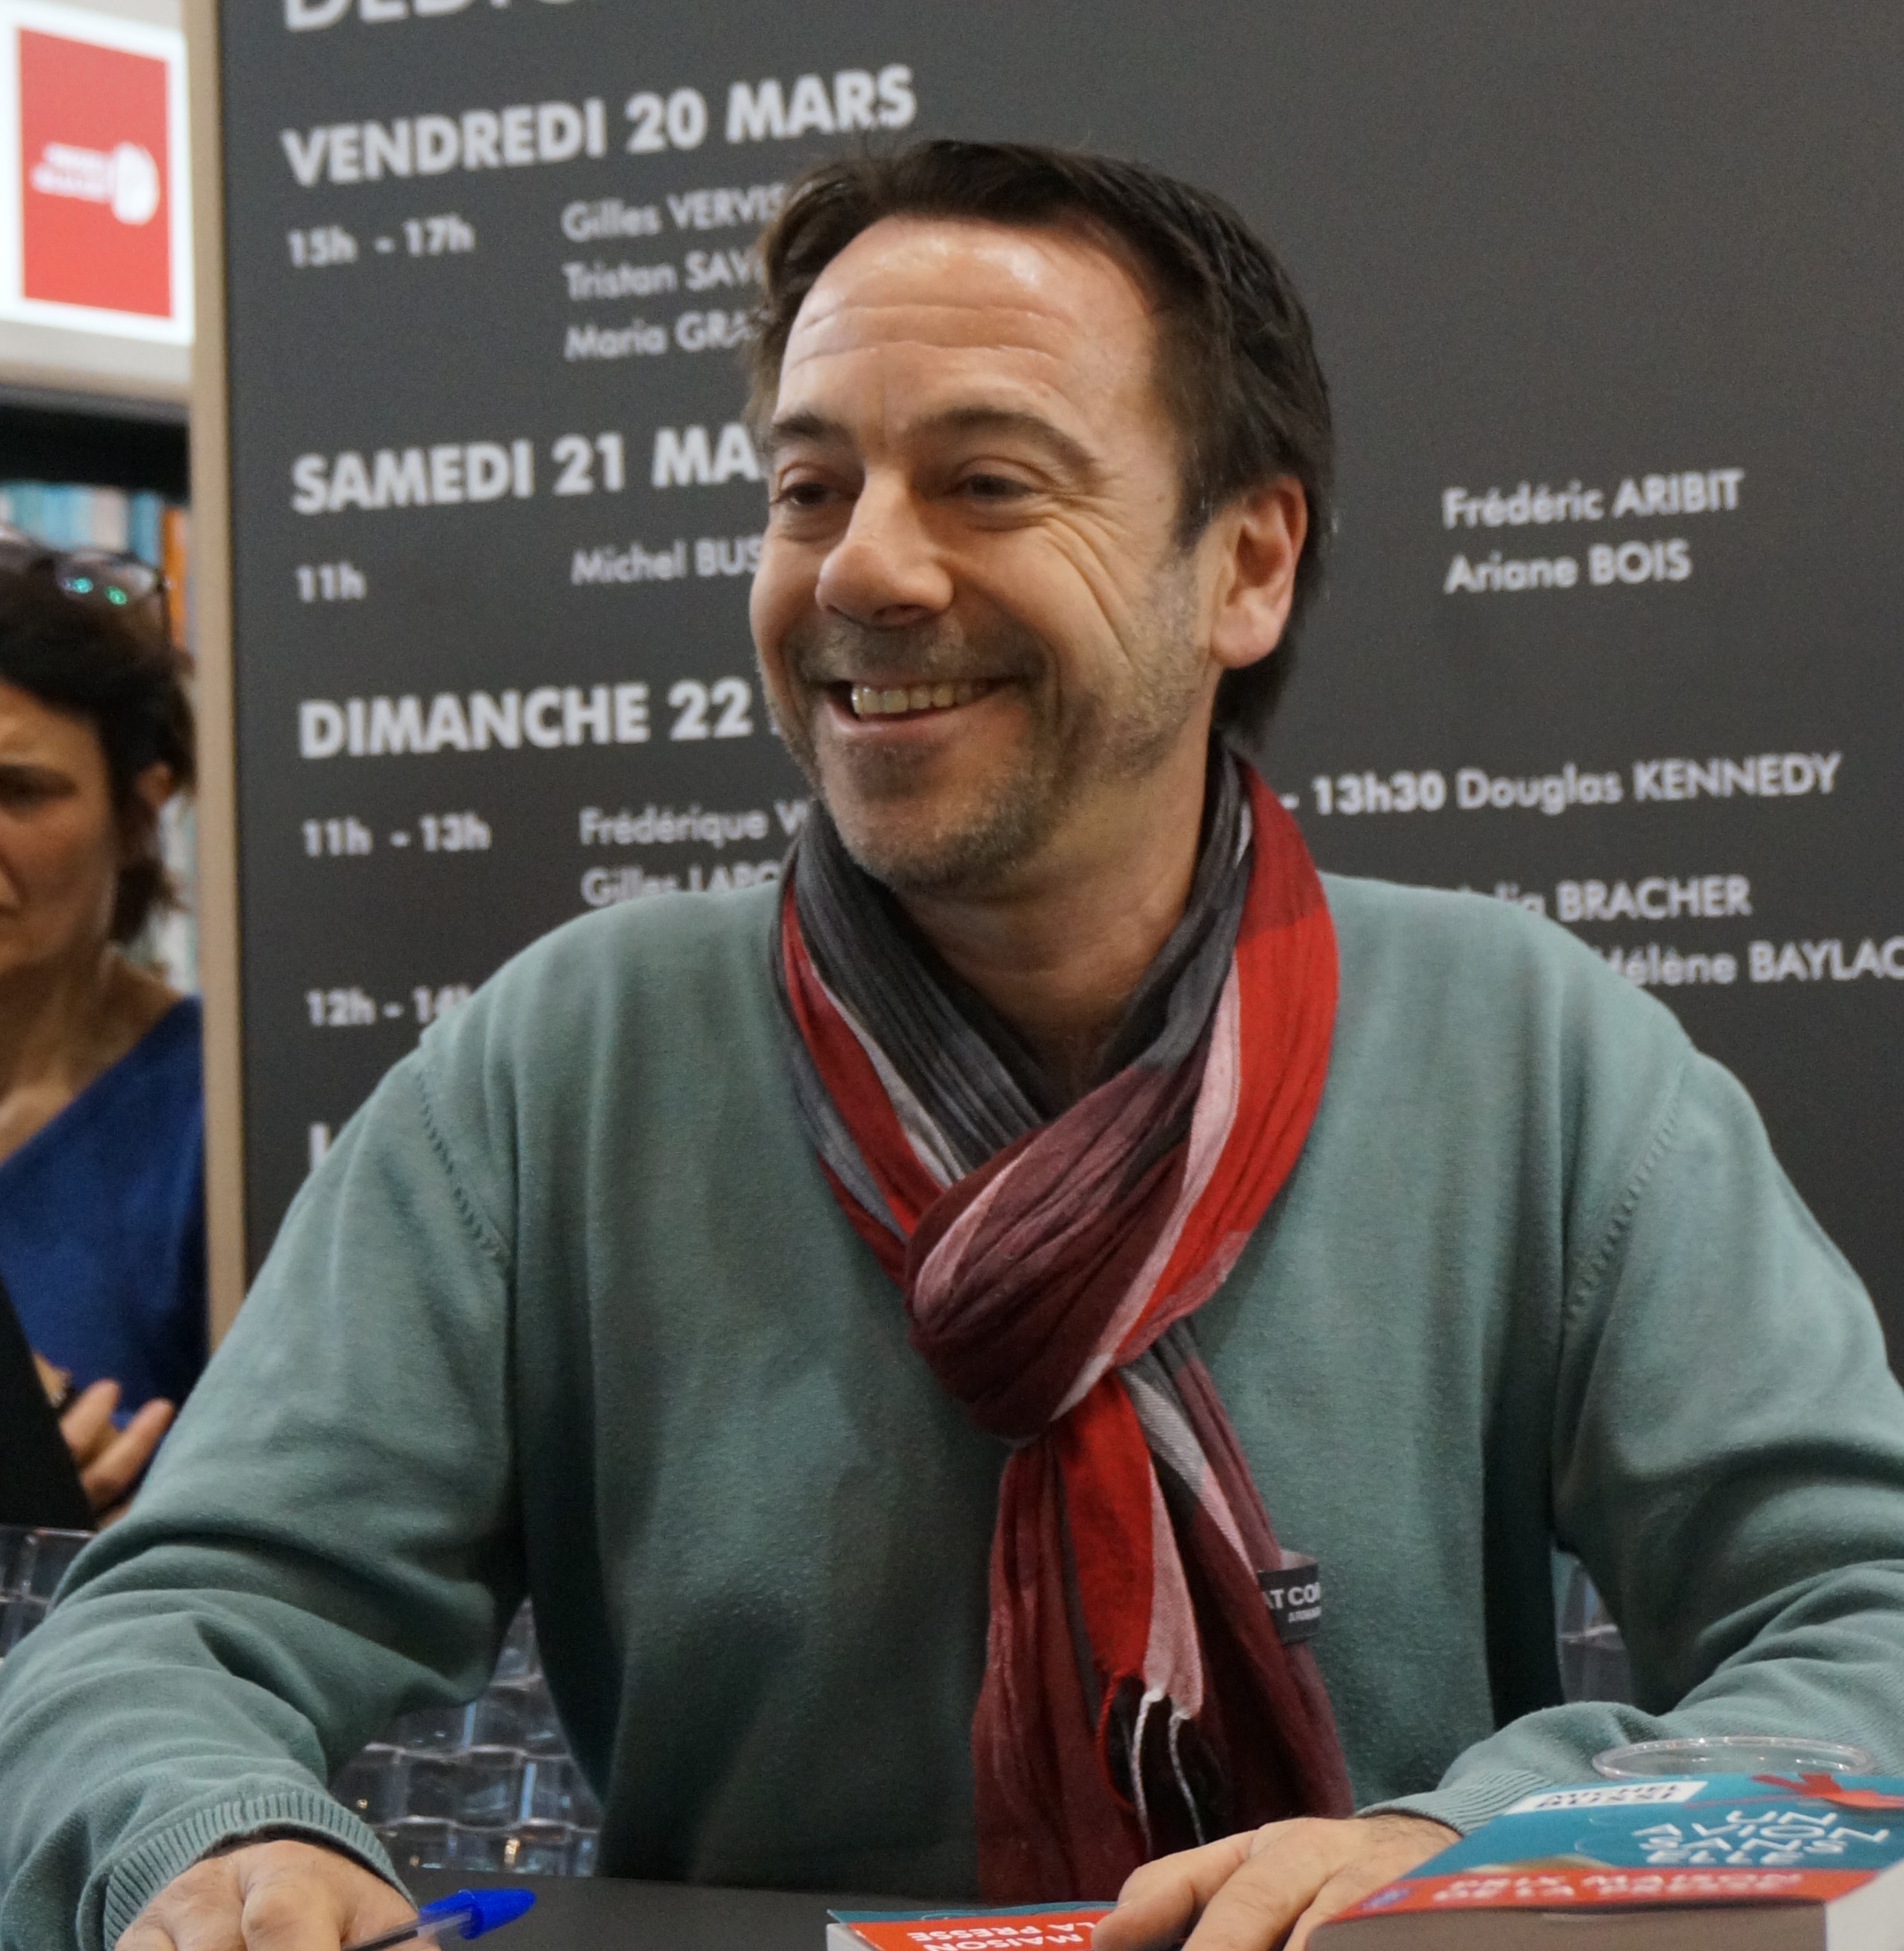 Michel Bussi (2015)